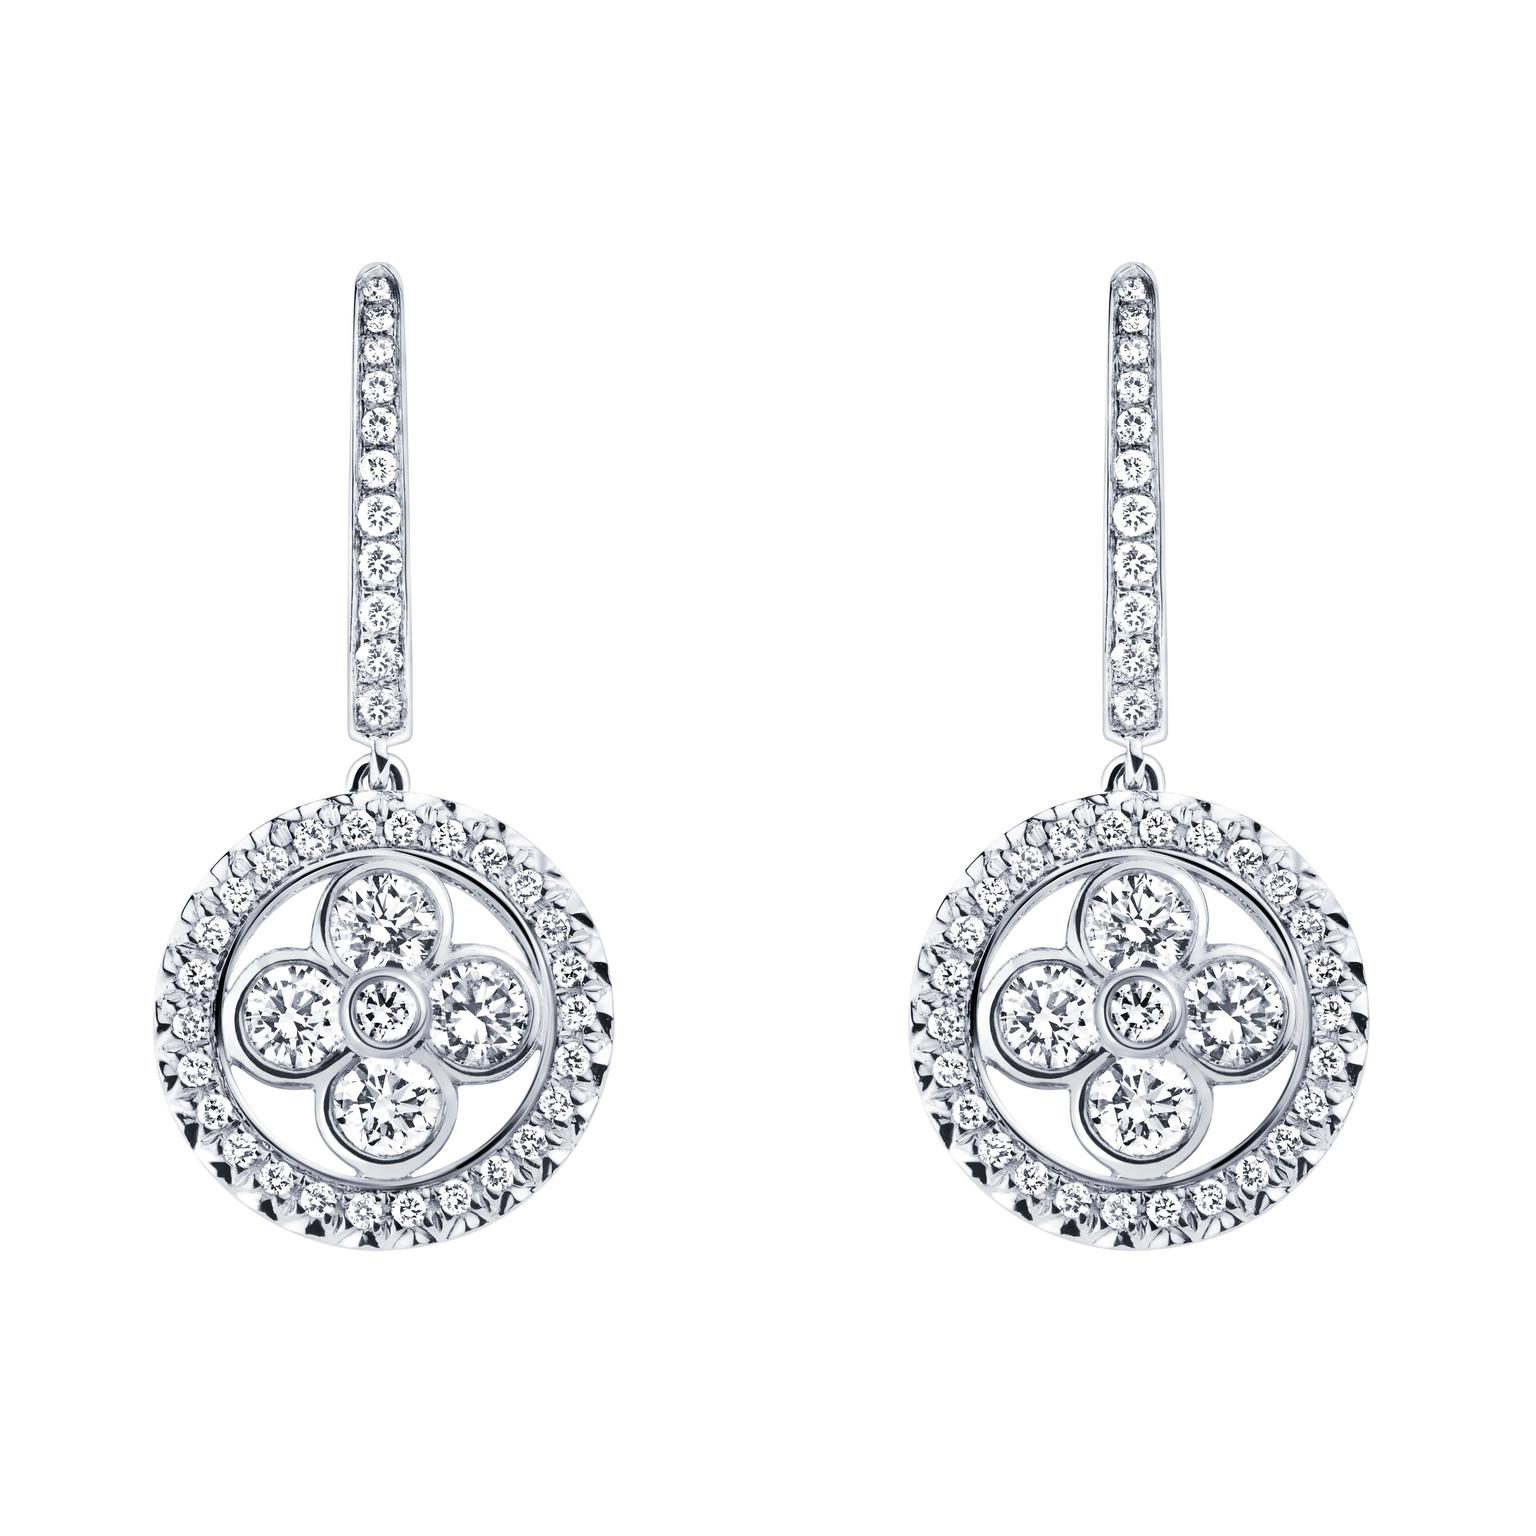 Louis Vuitton Monogram Sun earrings in white gold and diamonds.